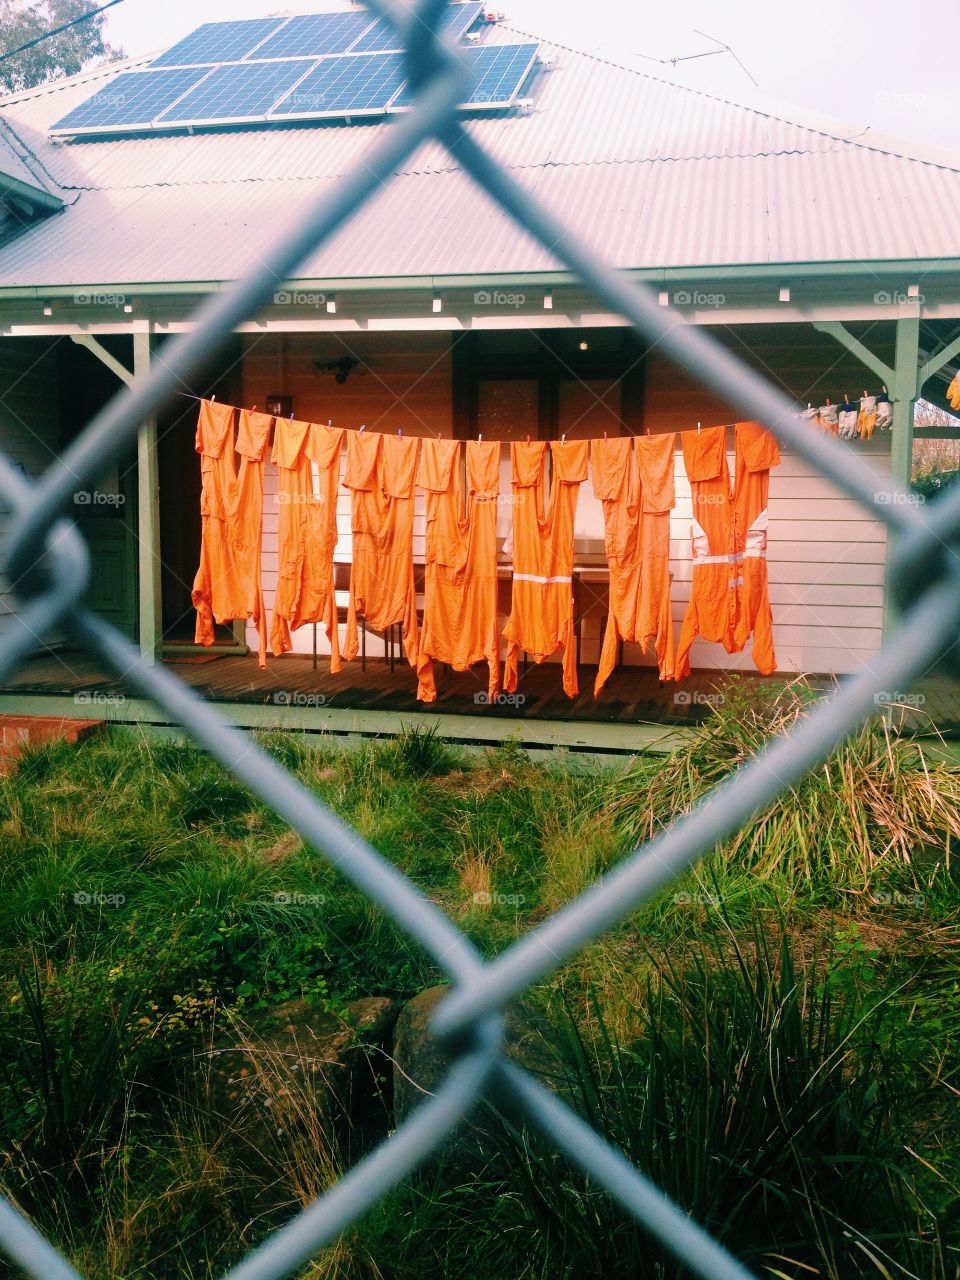 Orange overalls